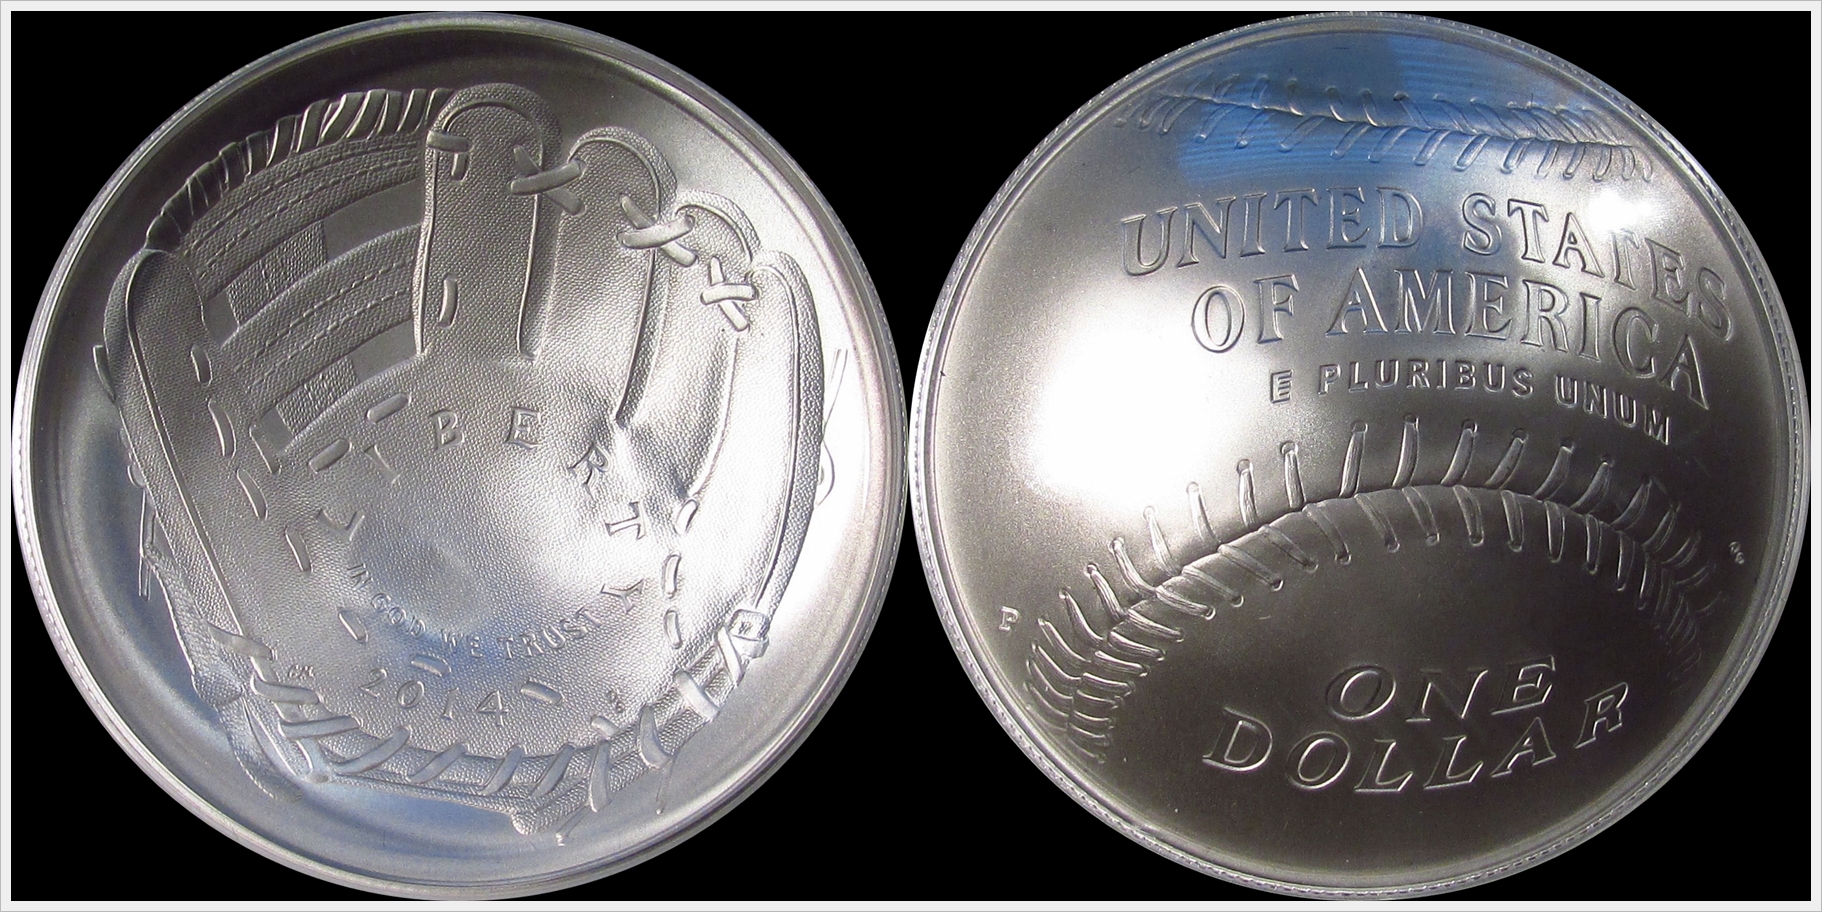 2014 HOF Unc. Silver Dollar.jpg